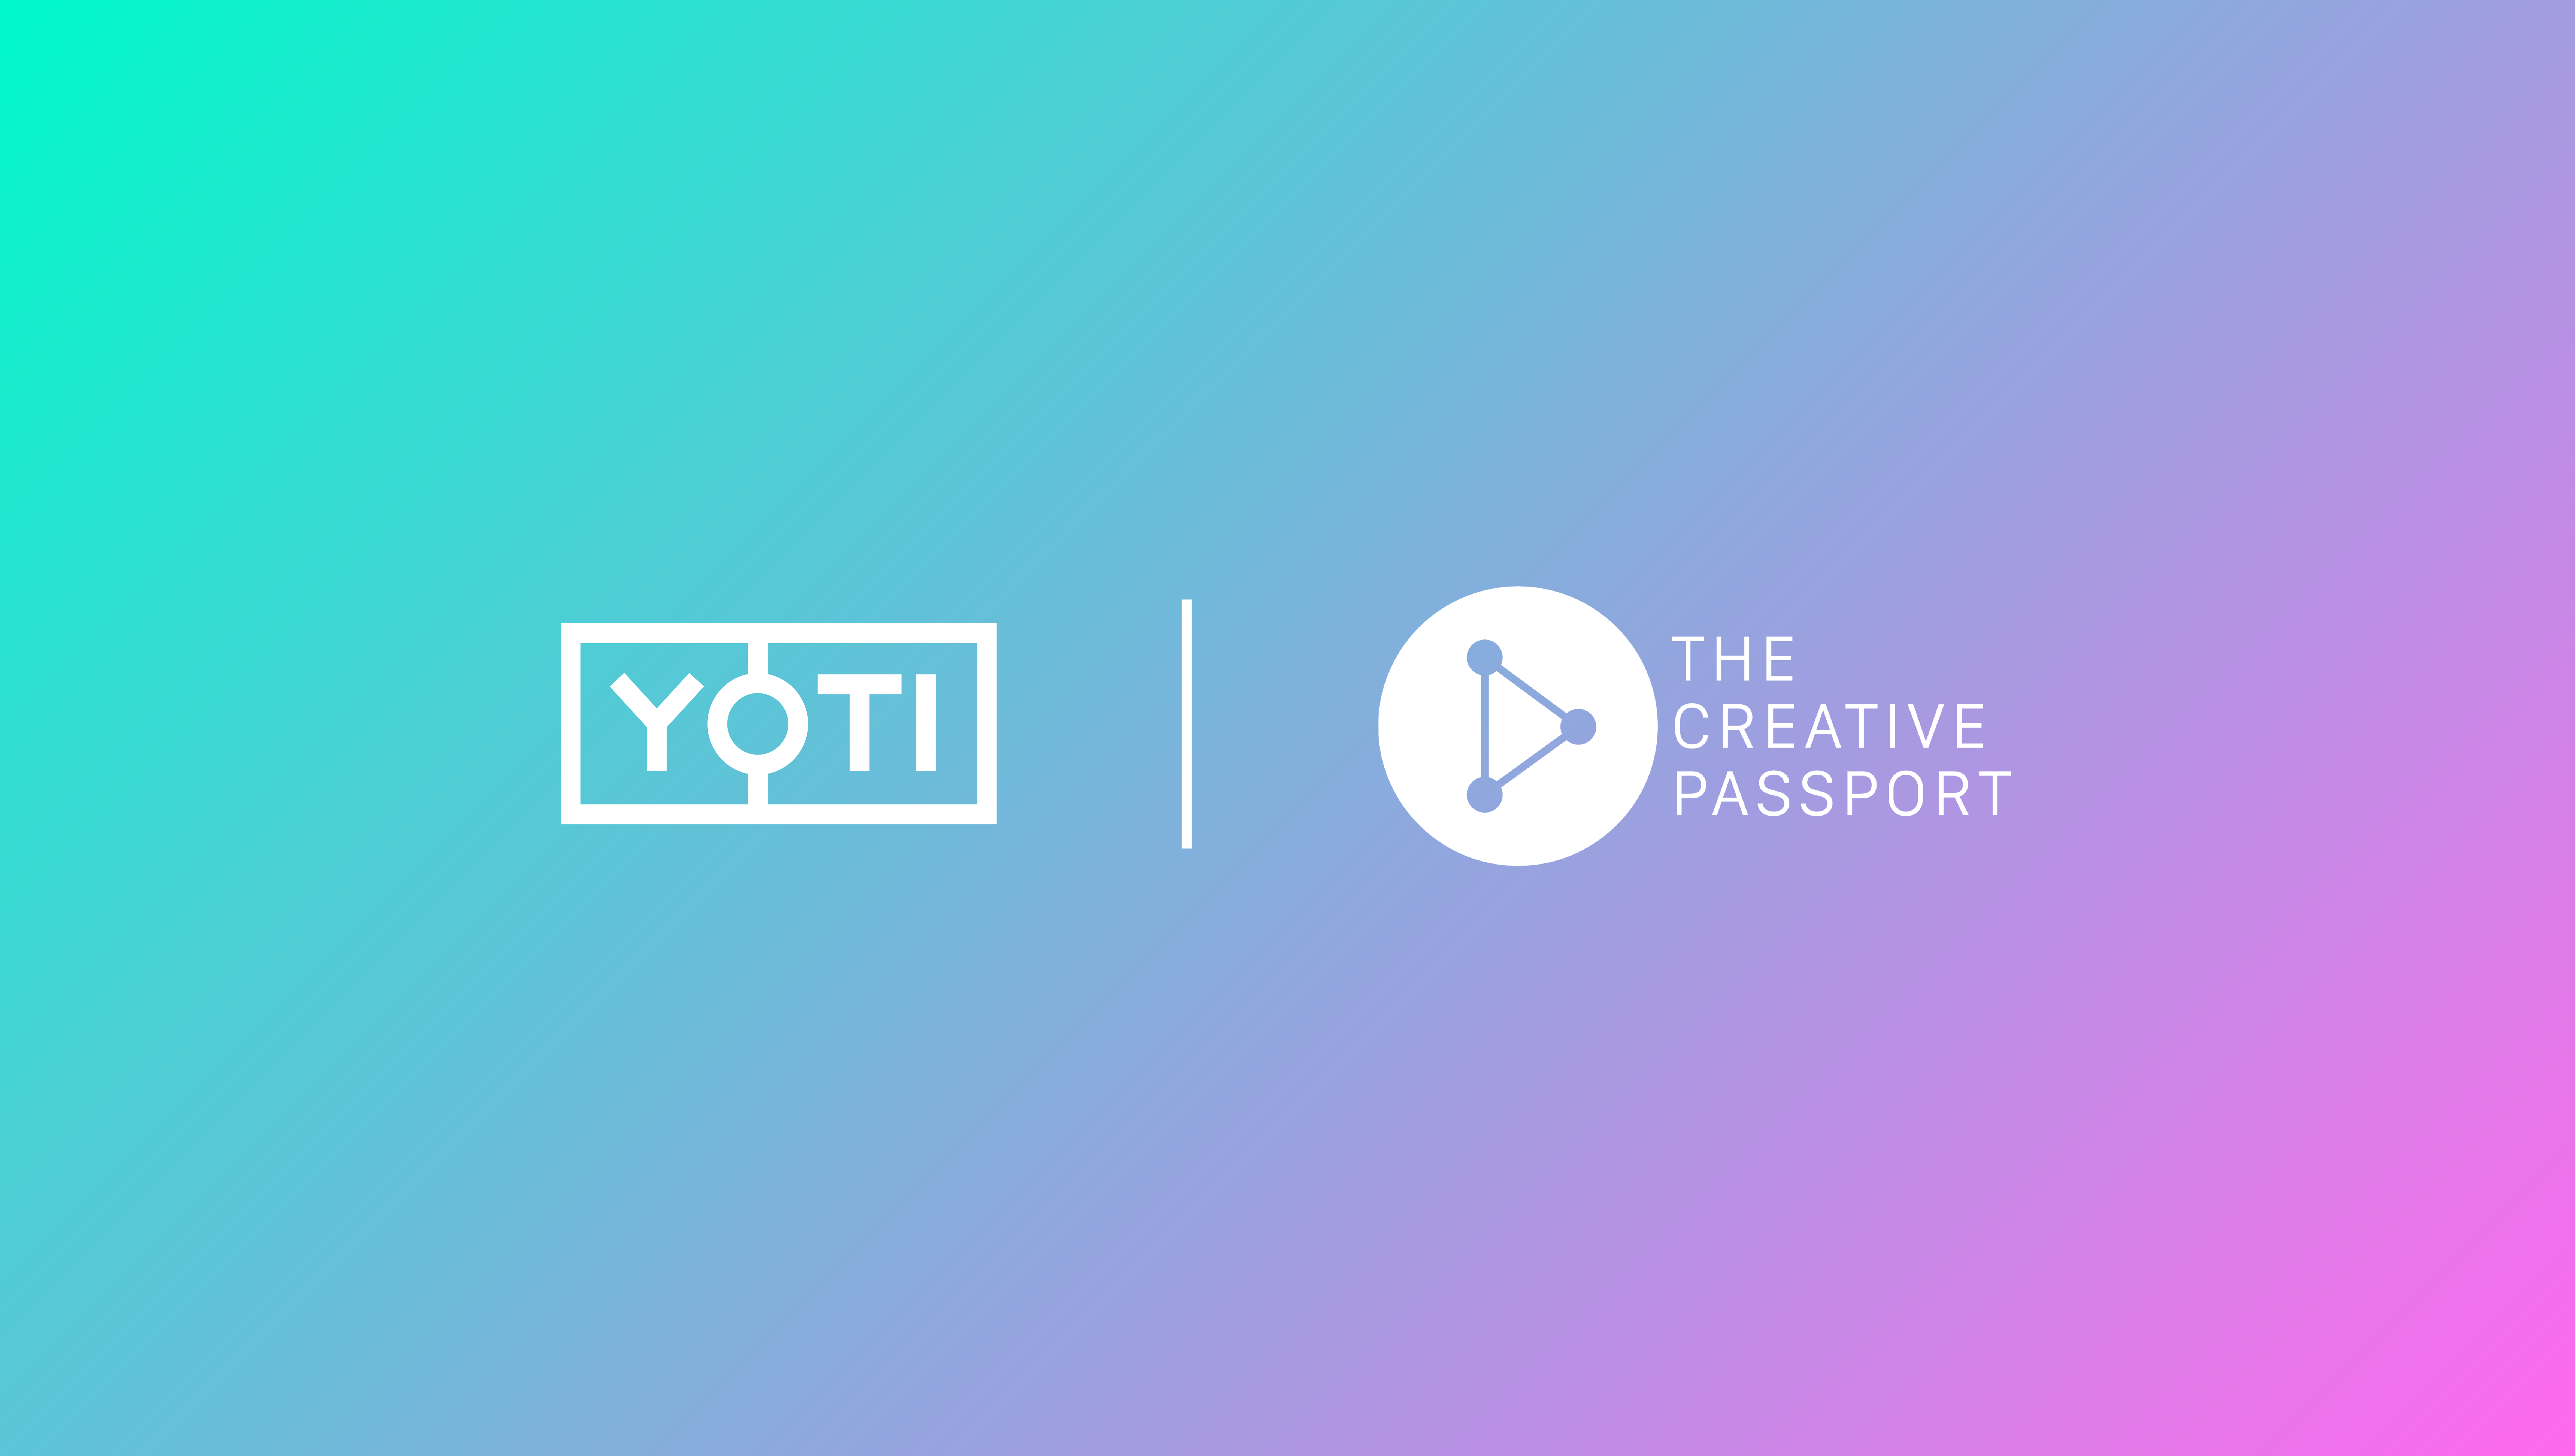 Yoti and TheCreativePassport logos presented together